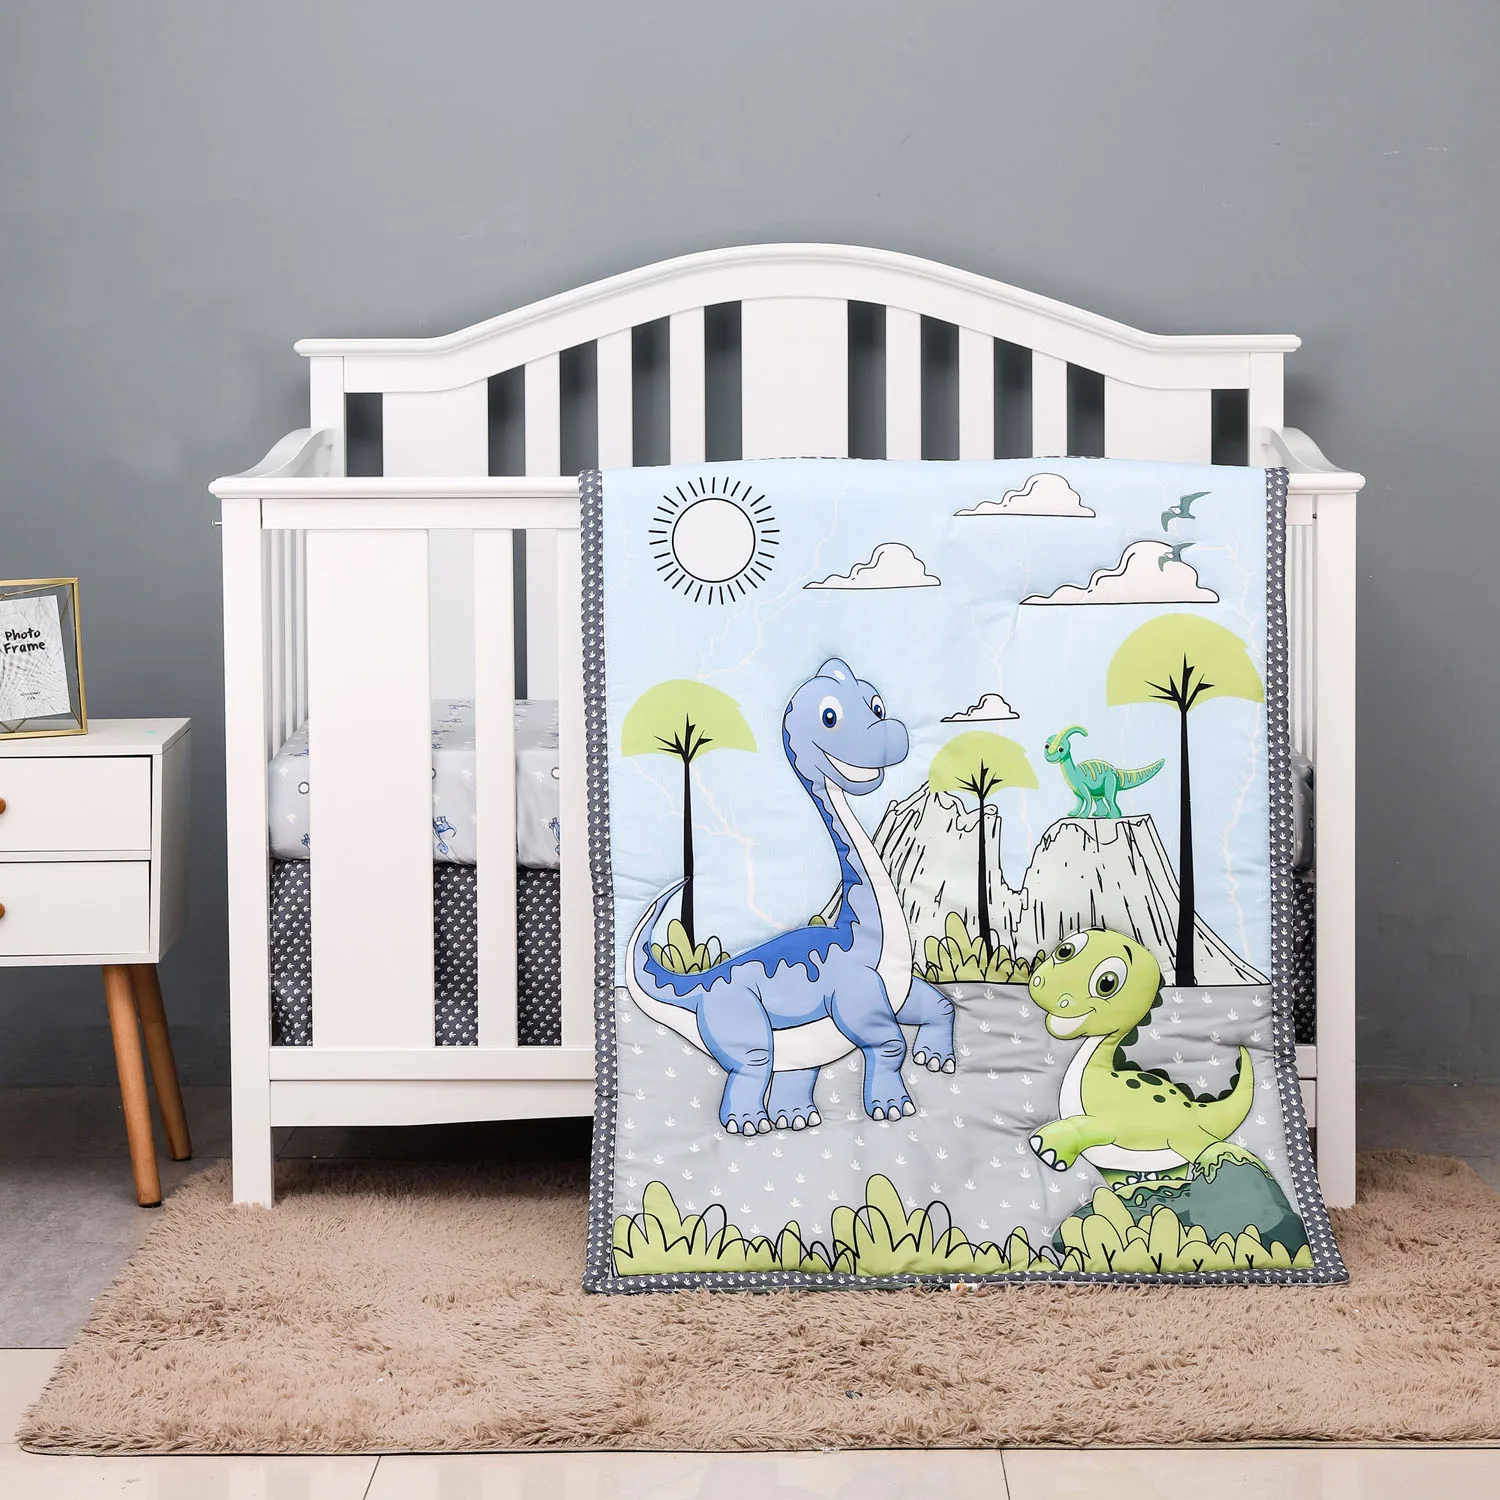 3 pcs Baby Crib Bedding Set for boys and girls hot sale including quilt, crib sheet, crib skirt